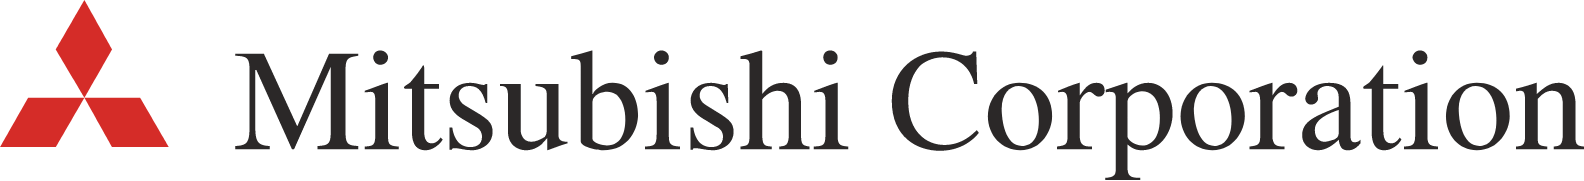 Mitsubishi Corporation logo large (transparent PNG)